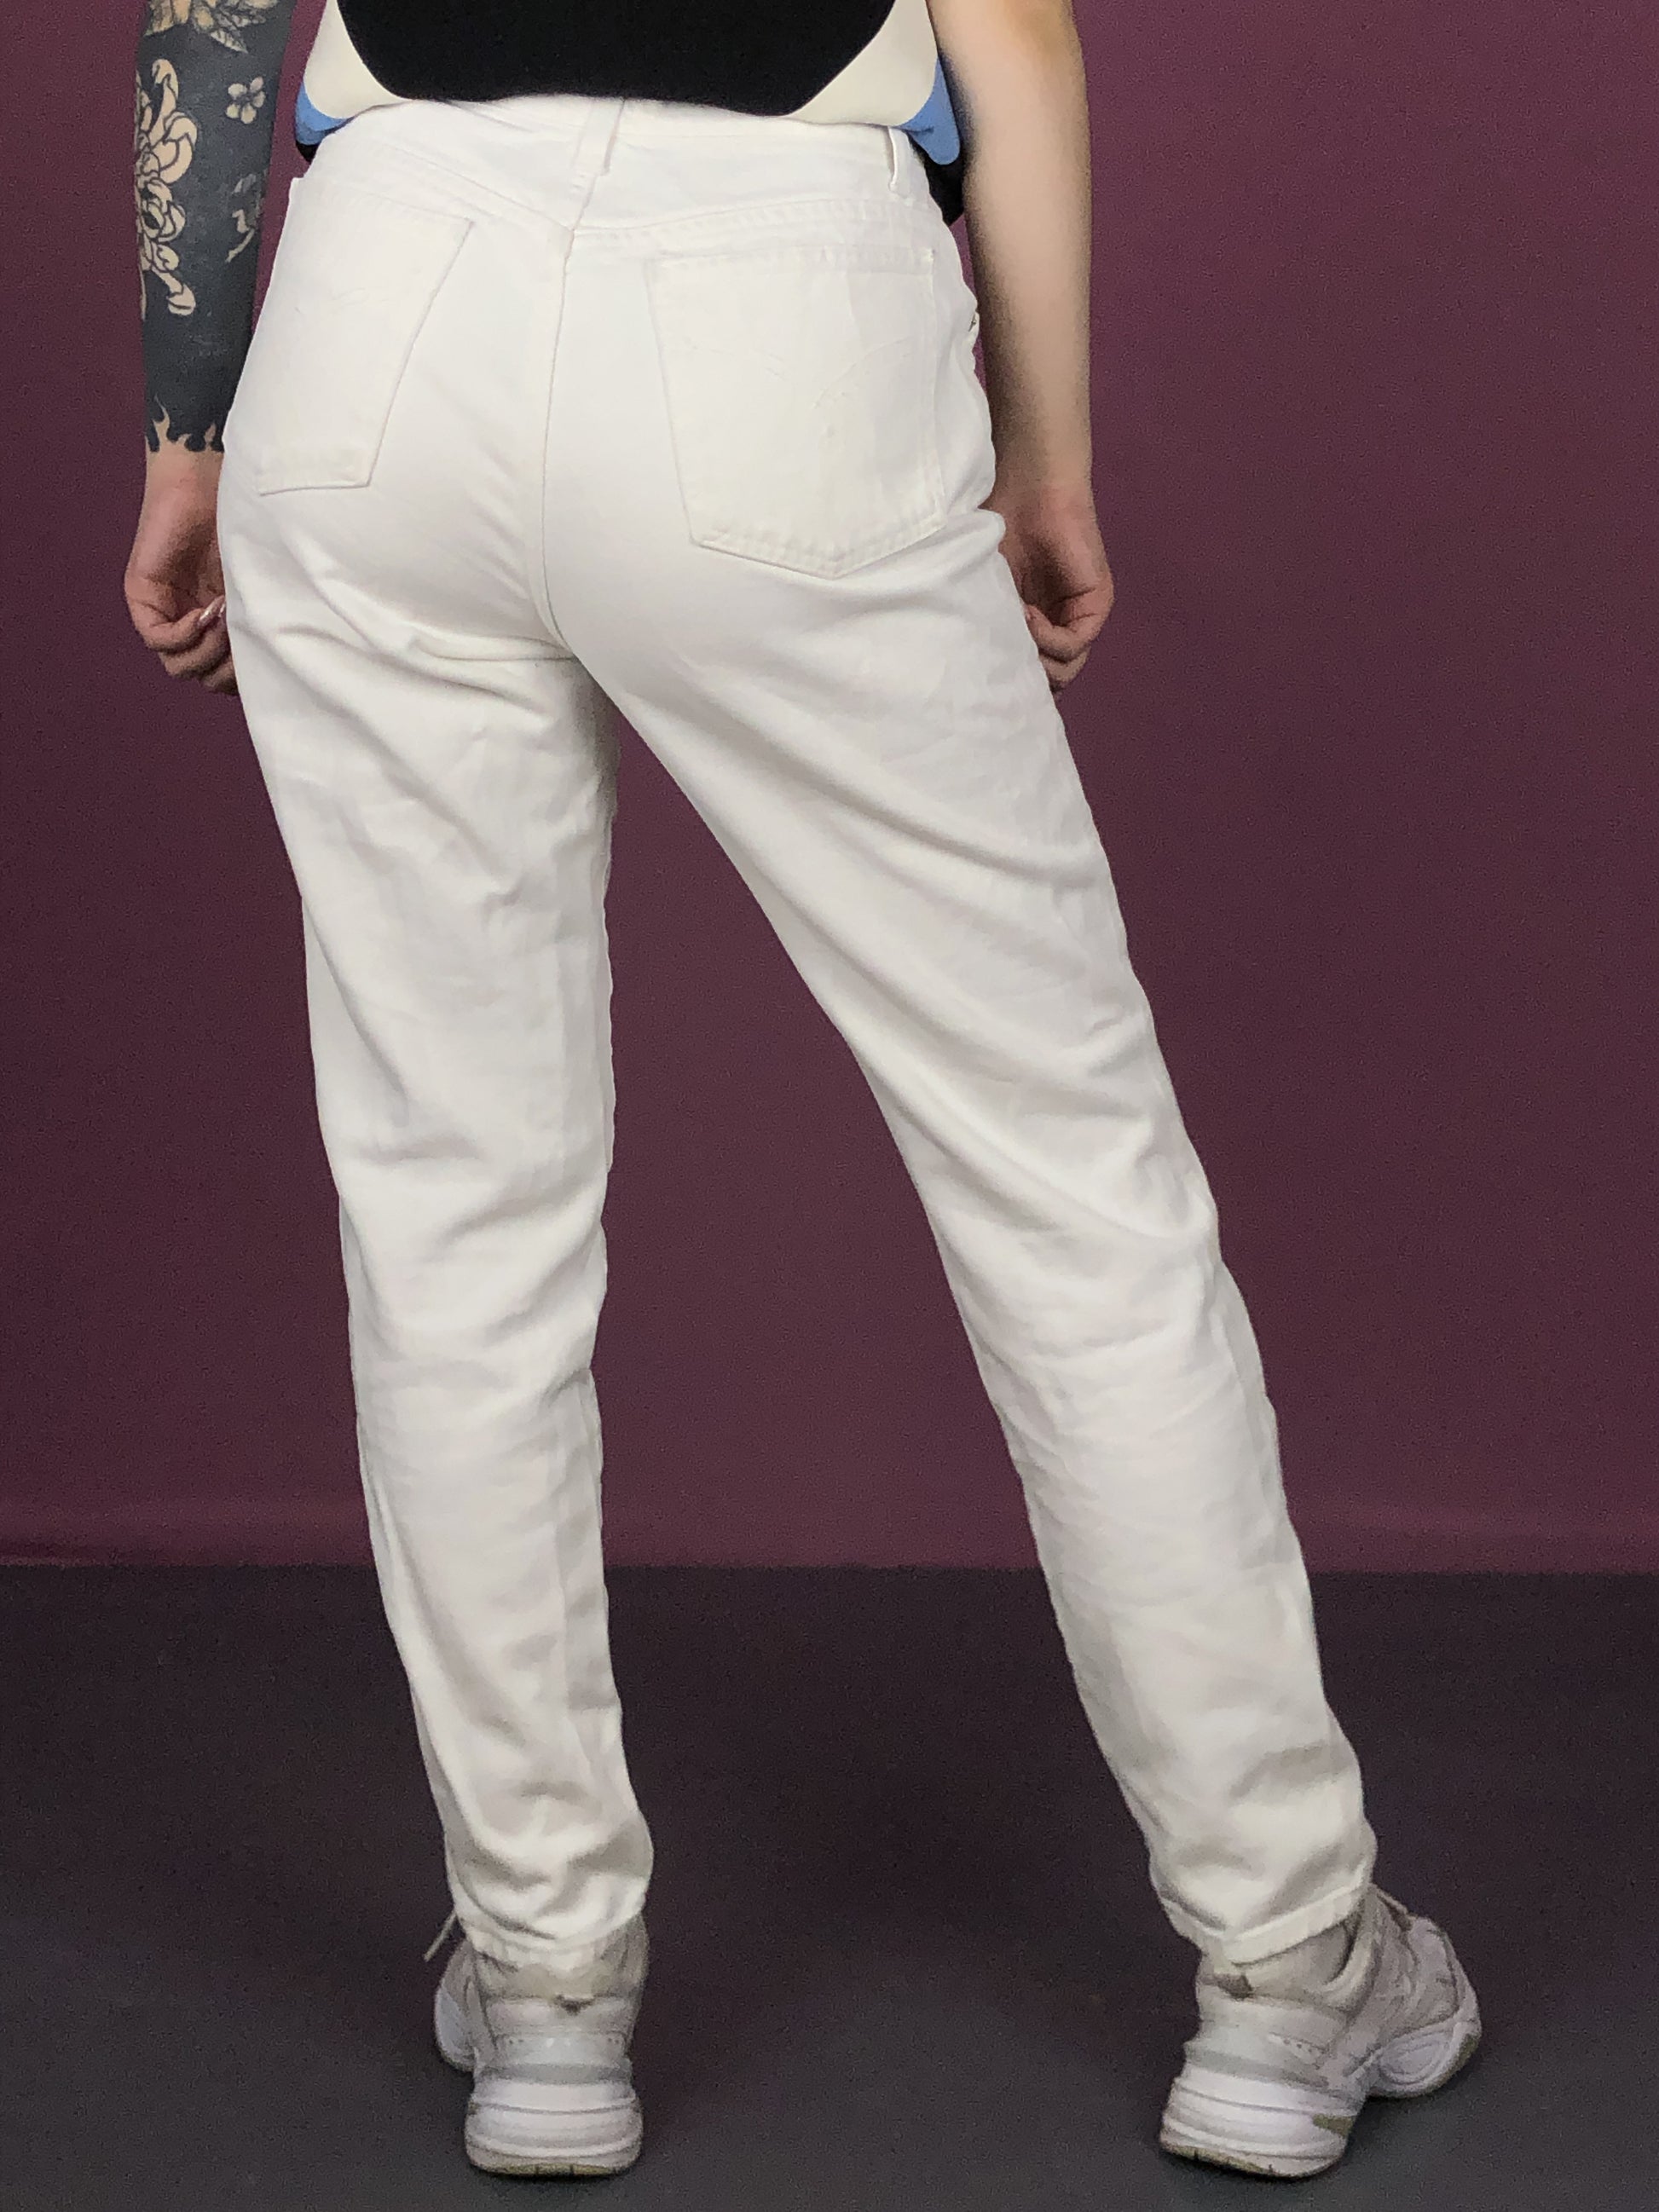 90s Moschino Vintage Women's Jeans - M White Cotton